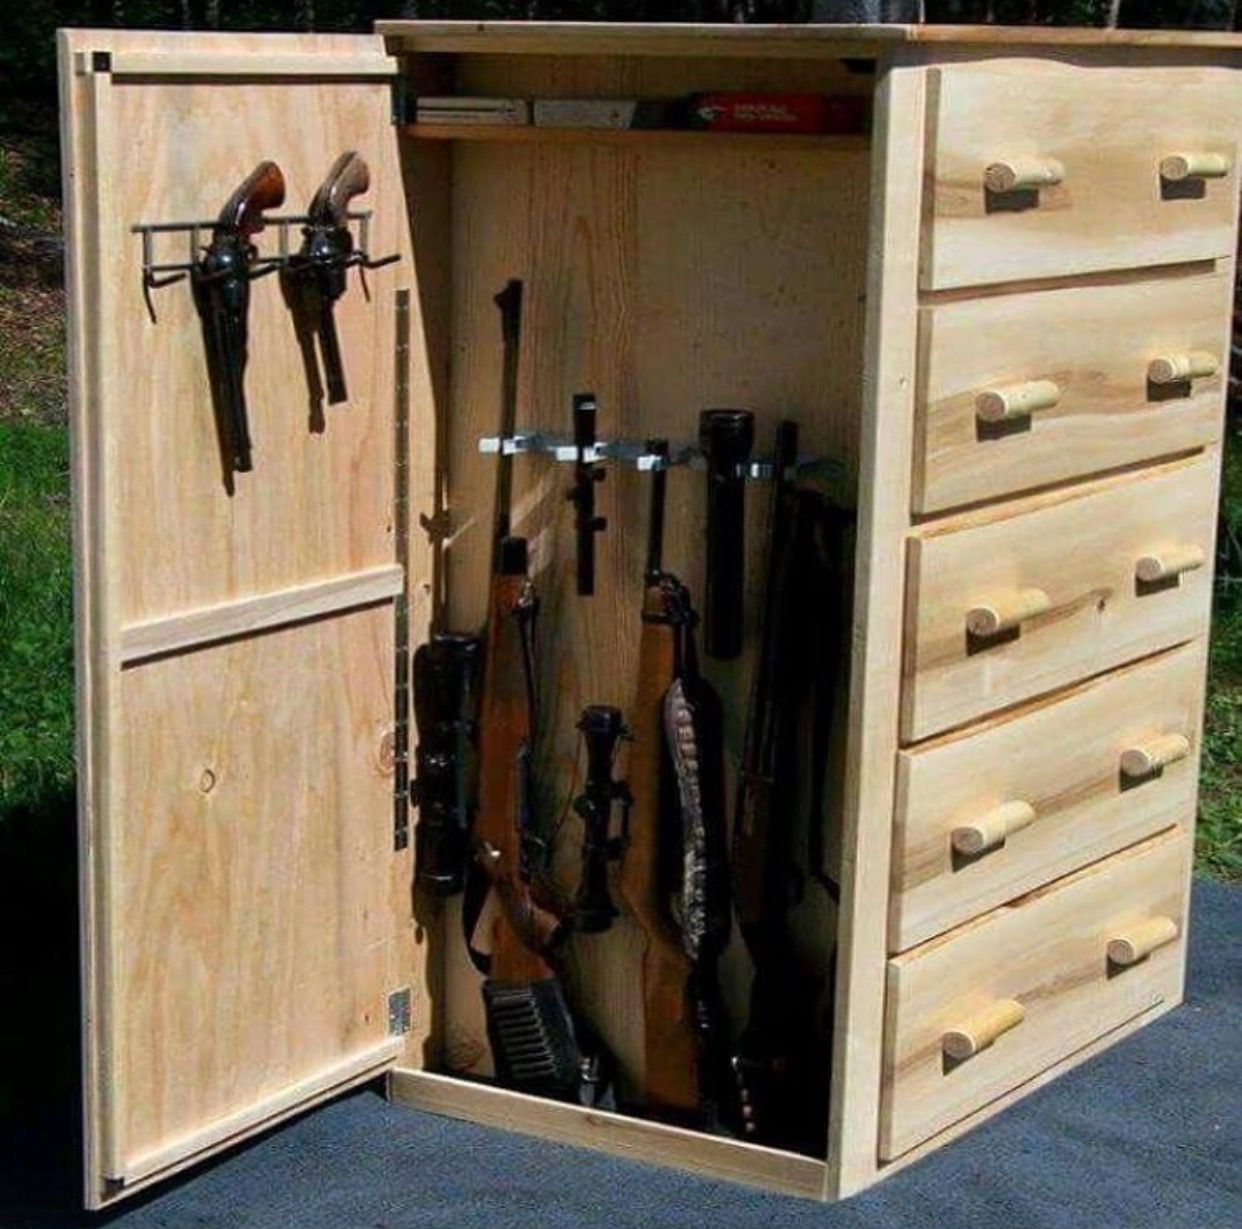 Pin on Gun Safes, Cases, & Storage